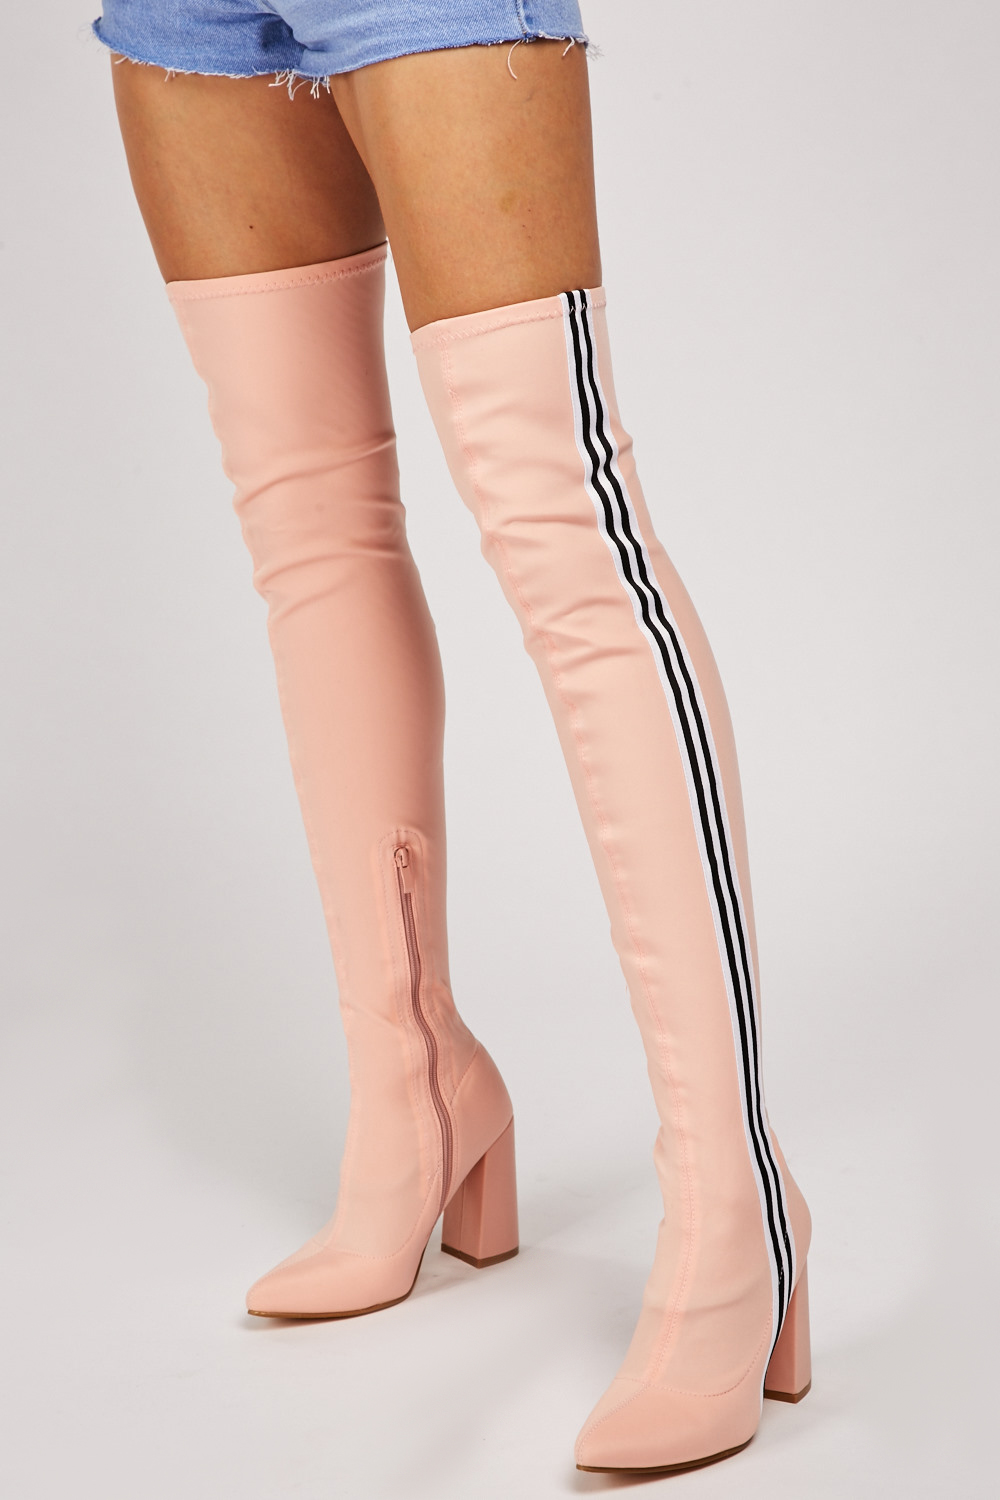 striped thigh high boots